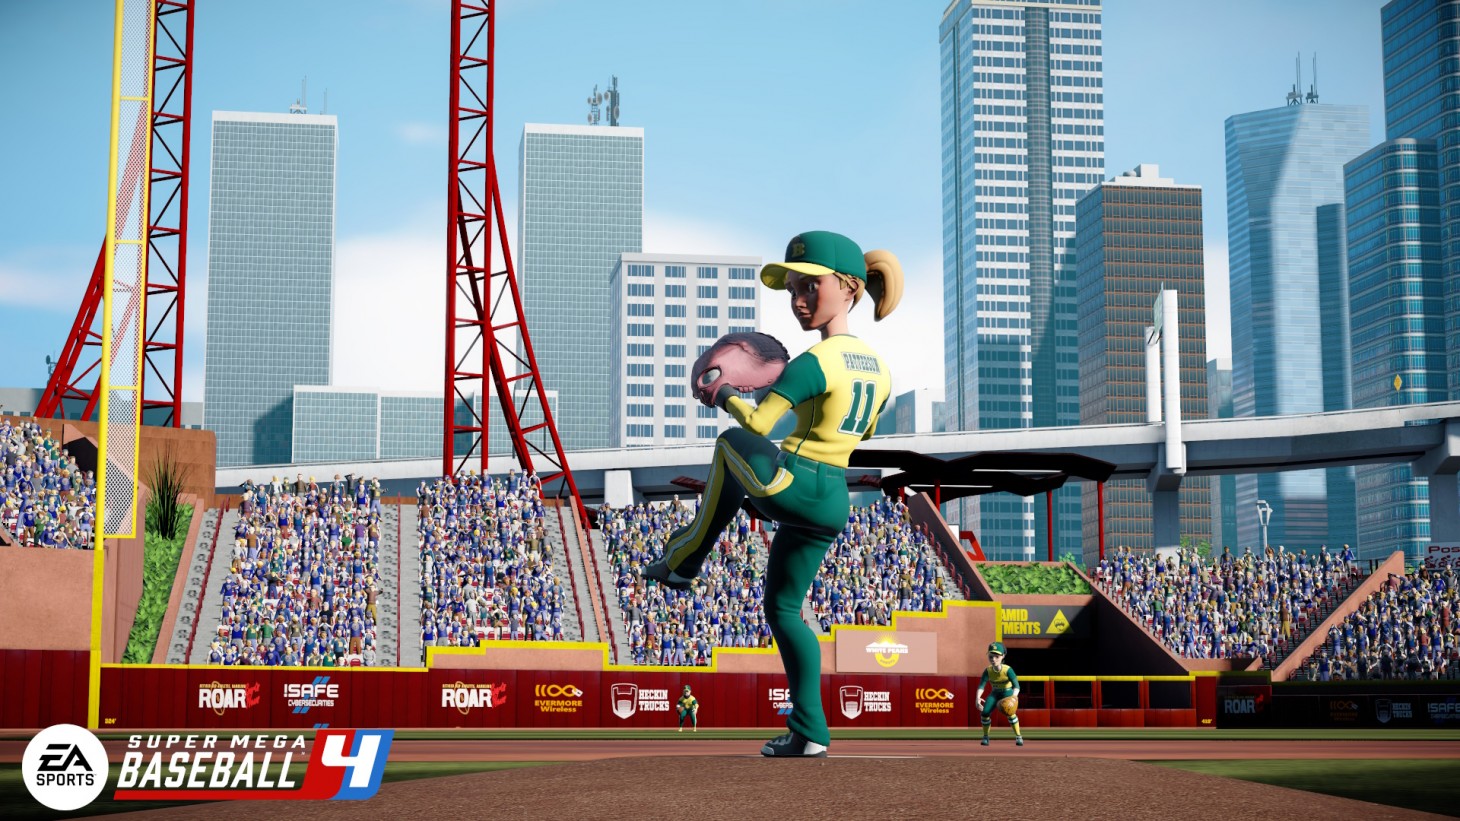 Super Mega Baseball 4 Review - A Solid Changeup - Game Informer